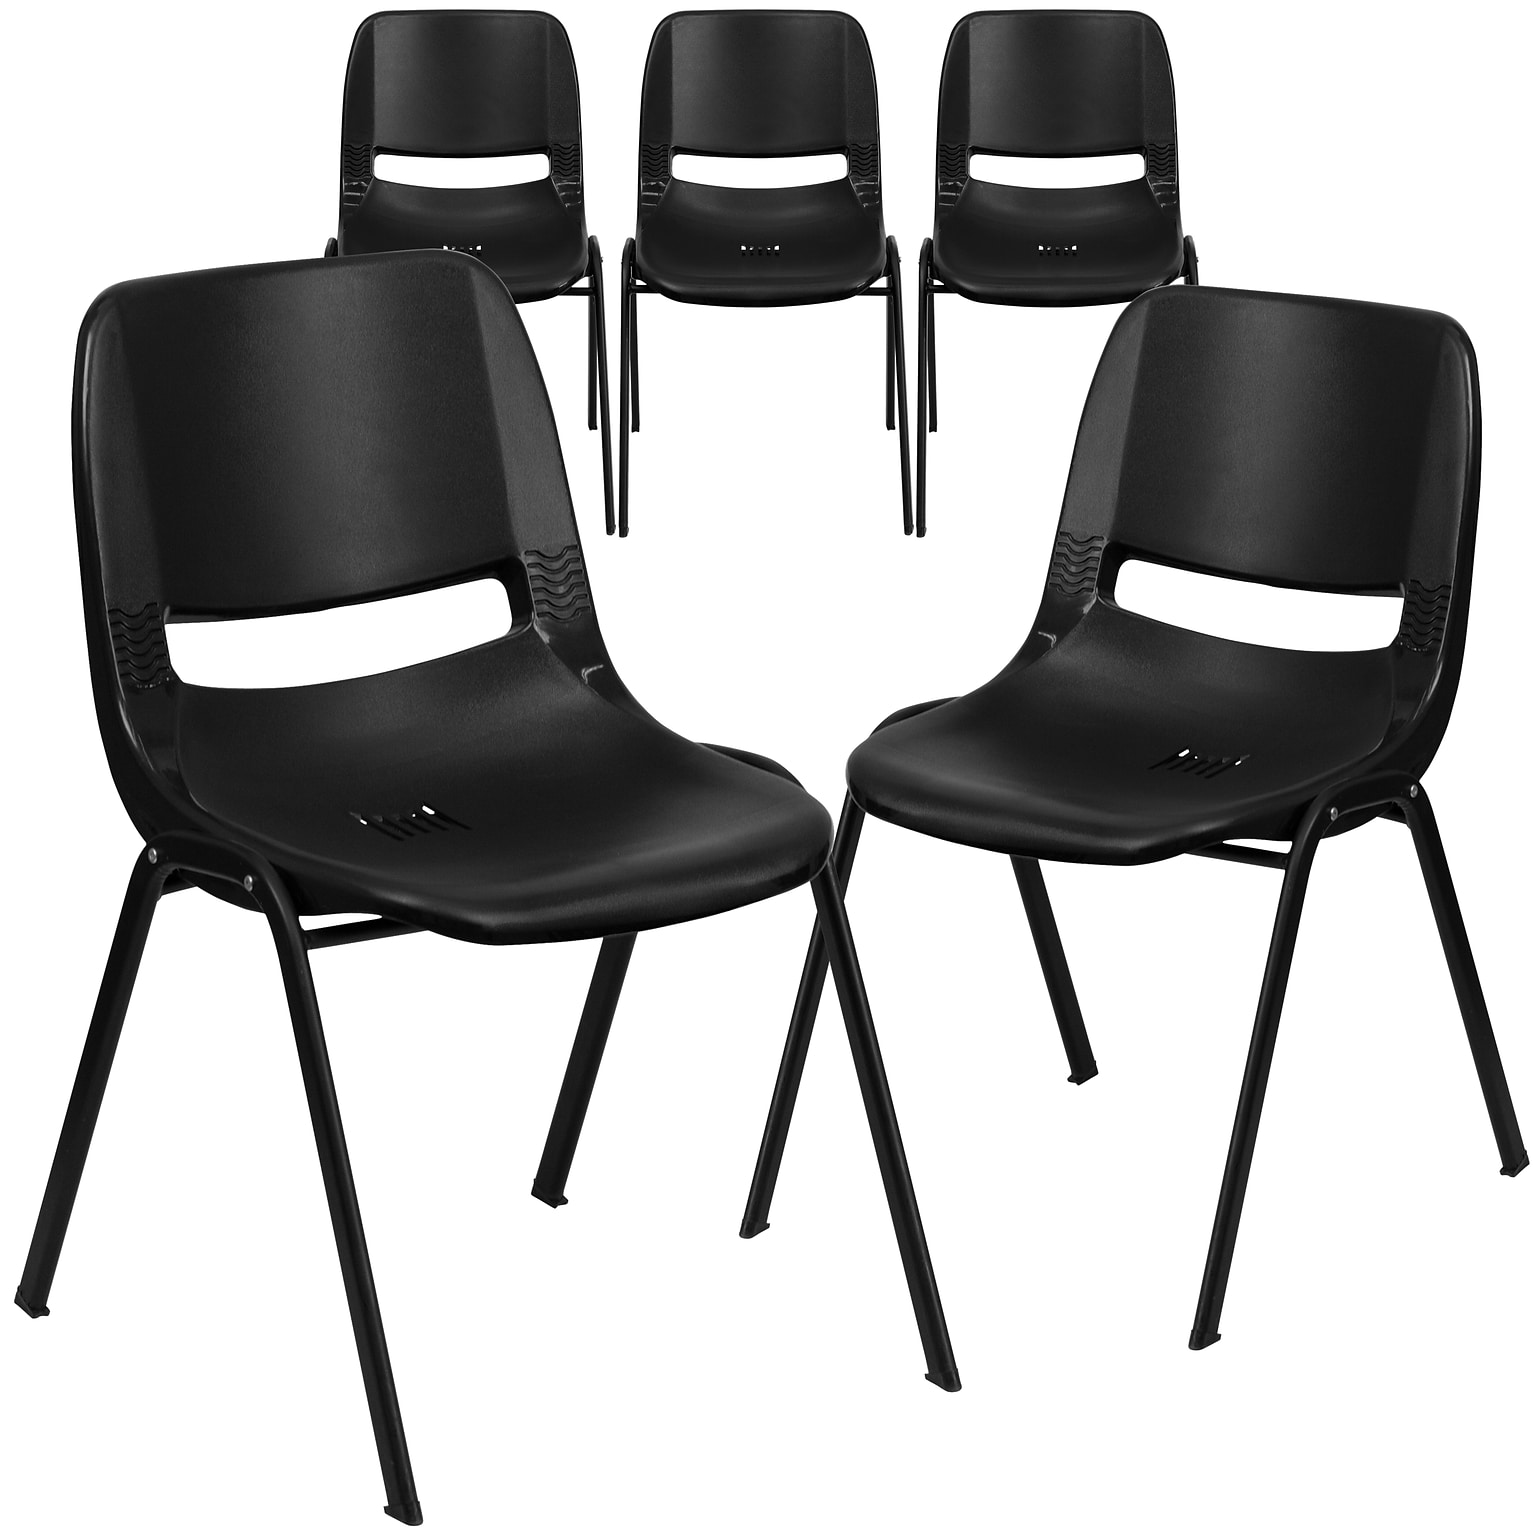 Flash Furniture HERCULES Classroom/Training Room/School Stacking Chair, Black (5-RUT-EO1-BK-GG)